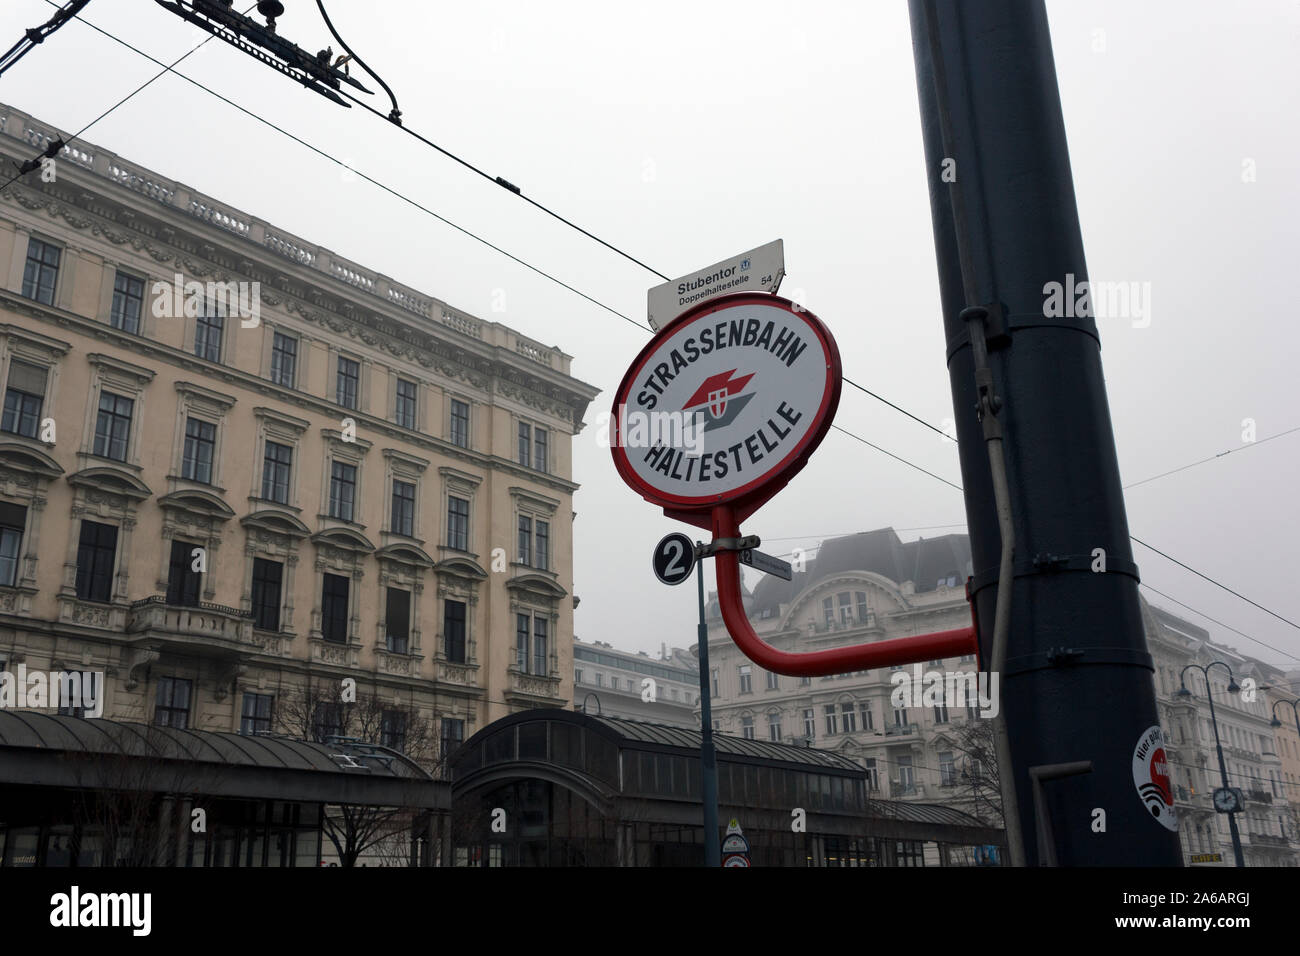 Vienna Electric Tram/Trolley Bus Stop sign in Vienna, Austria Stock Photo